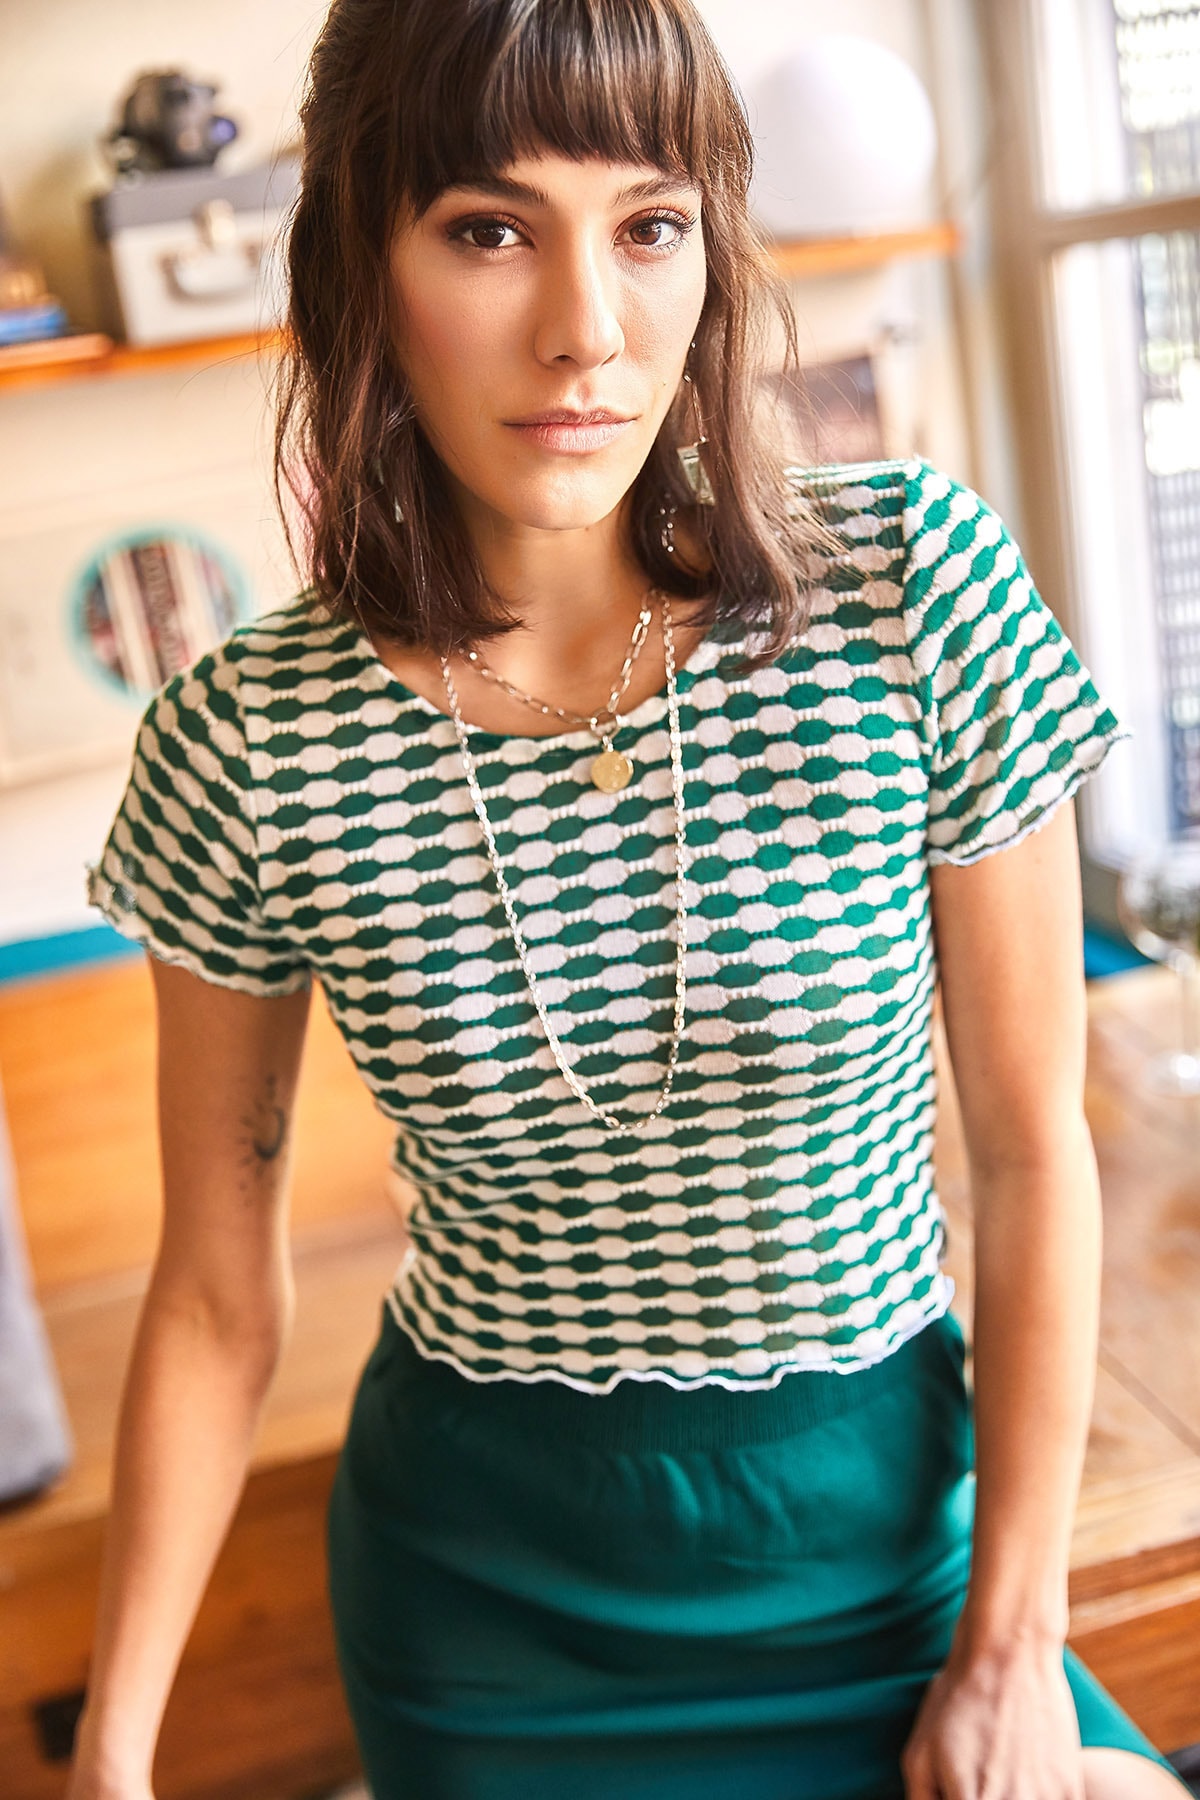 Женская зеленая полупрозрачная вязаная укороченная блузка Olalook, зеленый